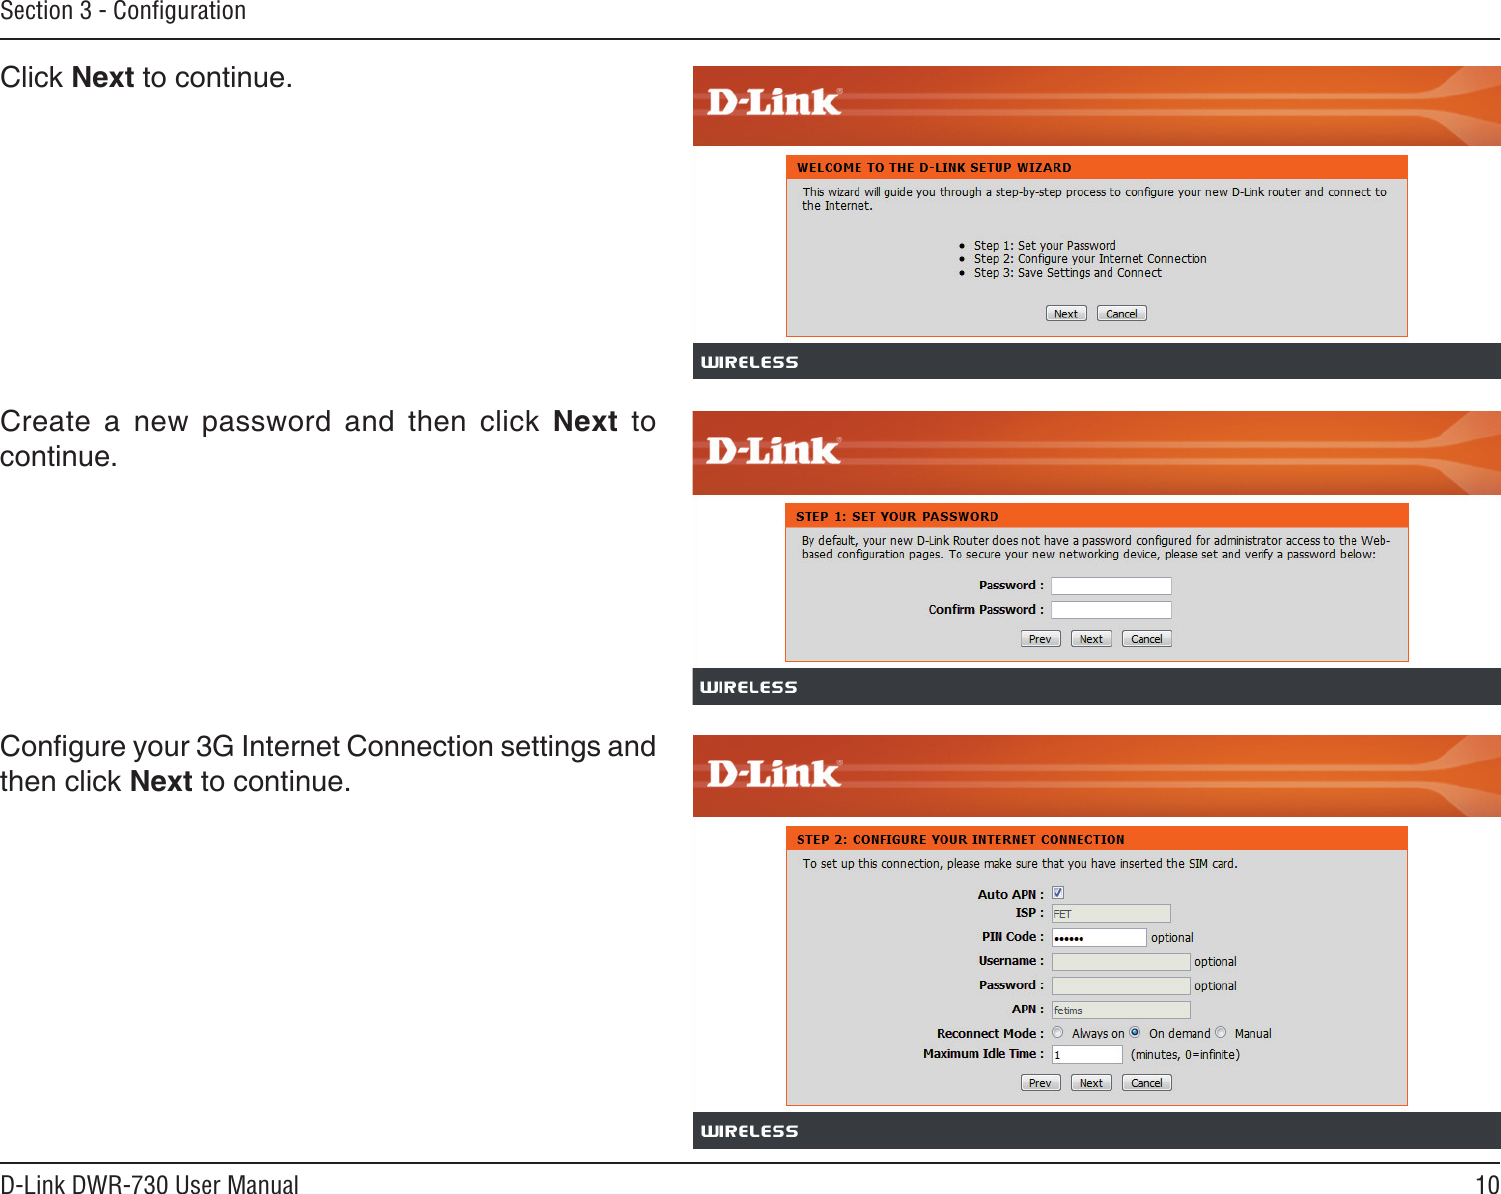 10D-Link DWR-730 User ManualSection 3 - Conﬁguration        